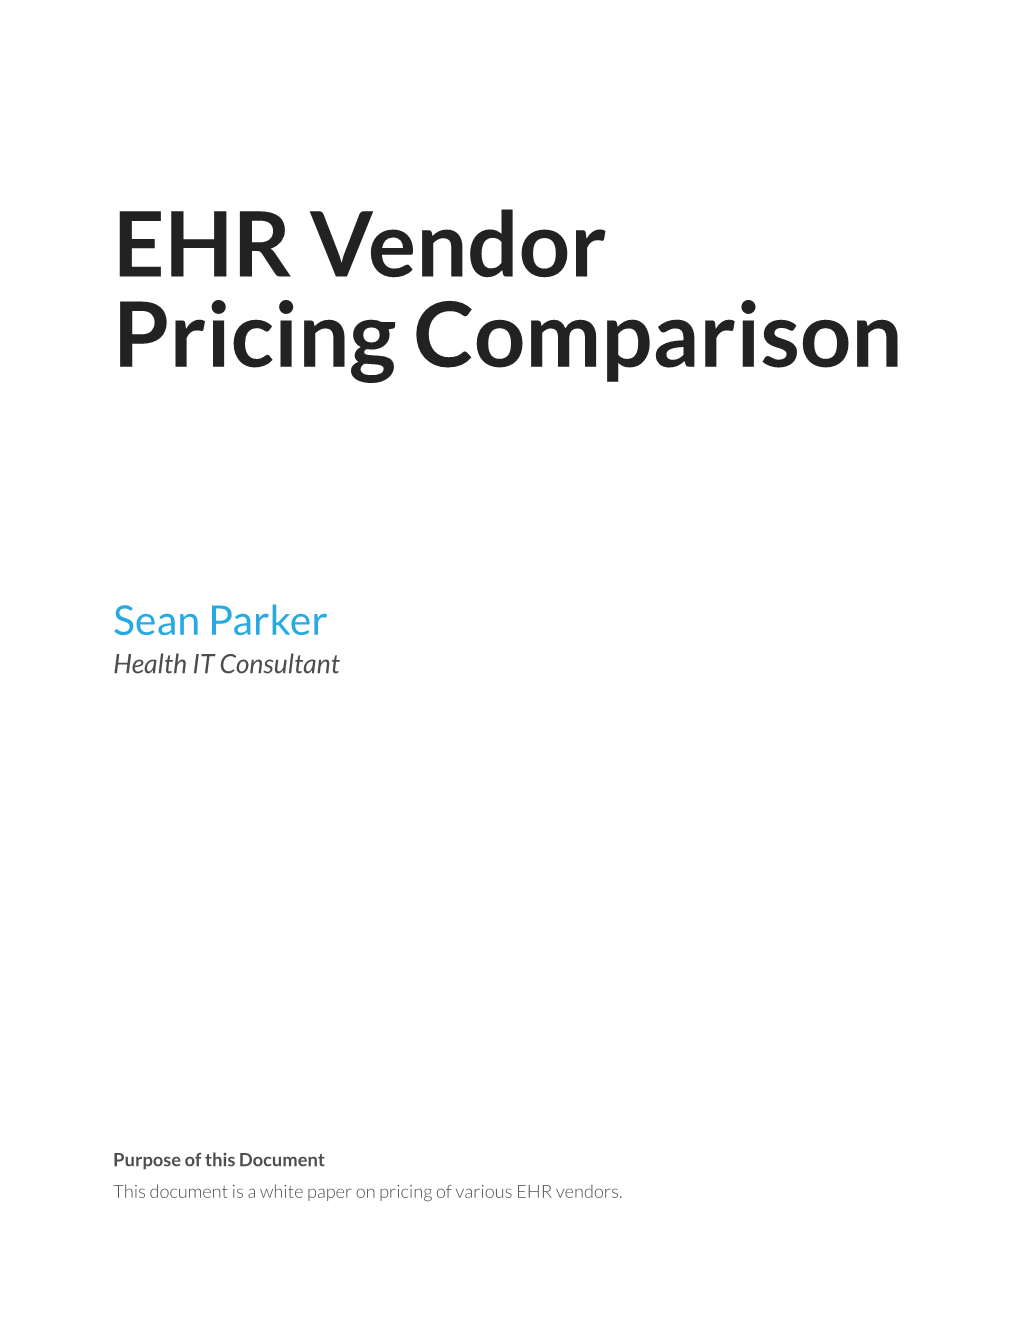 EHR Vendor Pricing Comparison SM